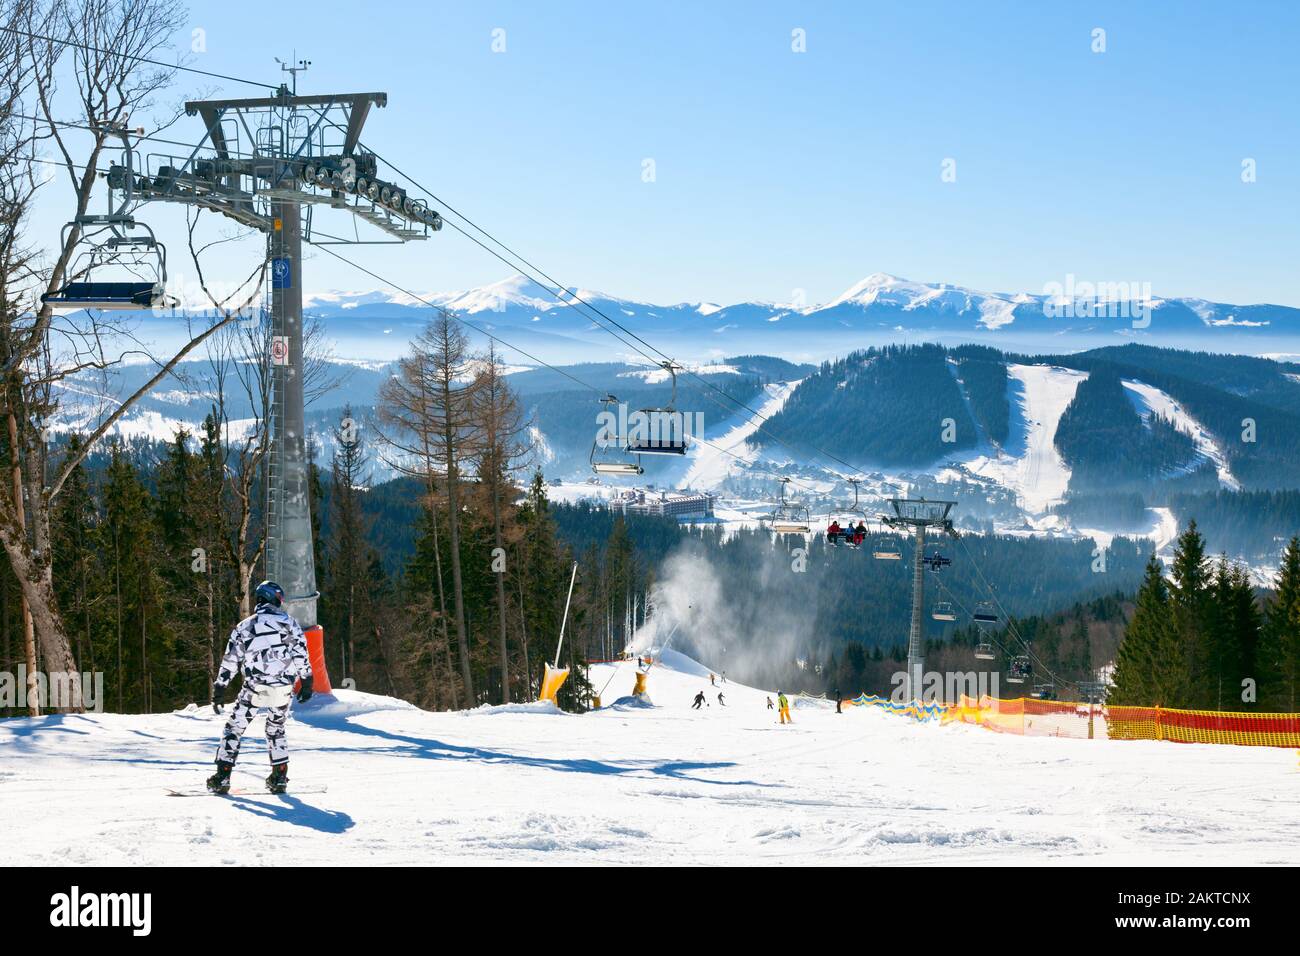 Snowborder going down the slope at ski resort Stock Photo